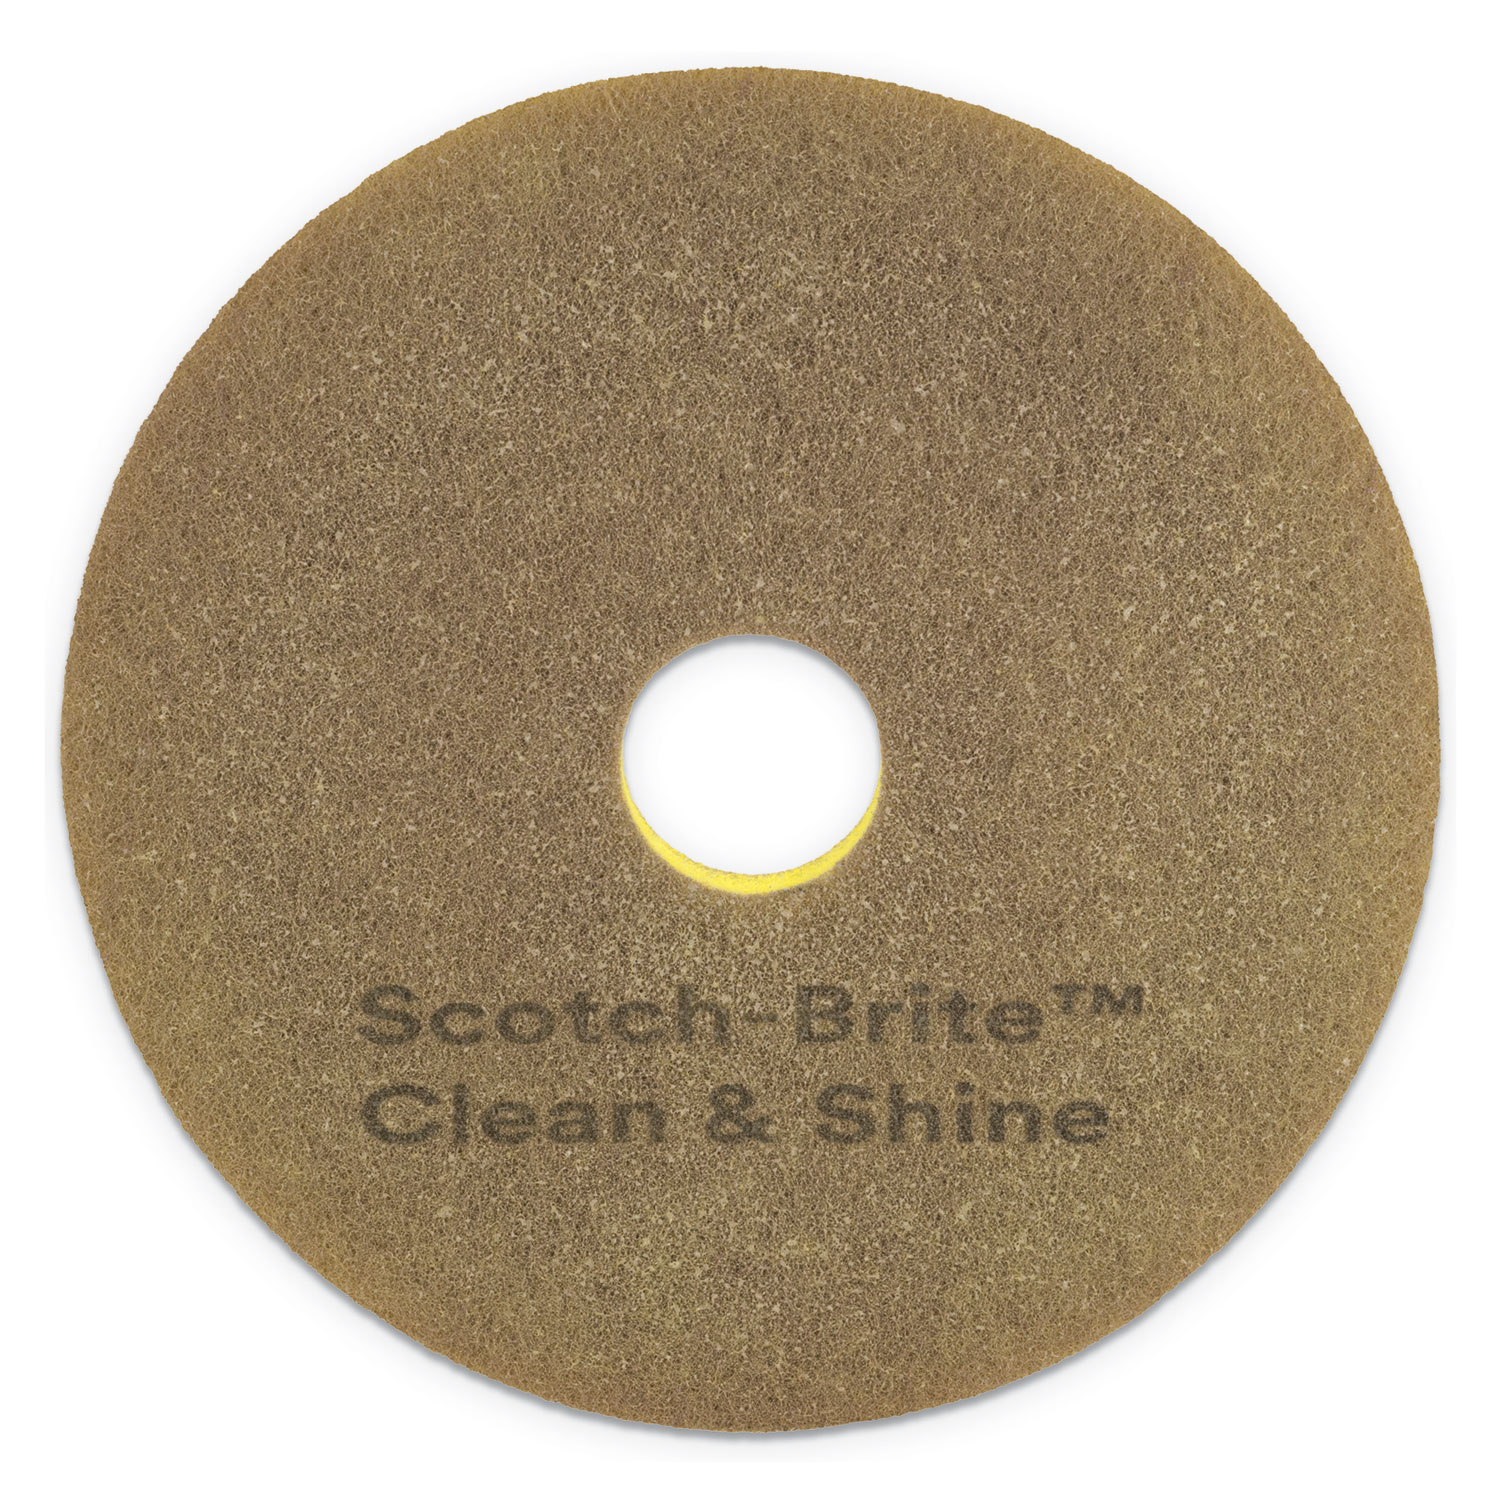  Scotch-Brite 09541 Clean and Shine Pad, 20 Diameter, Yellow/Gold, 5/Carton (MMM09541) 